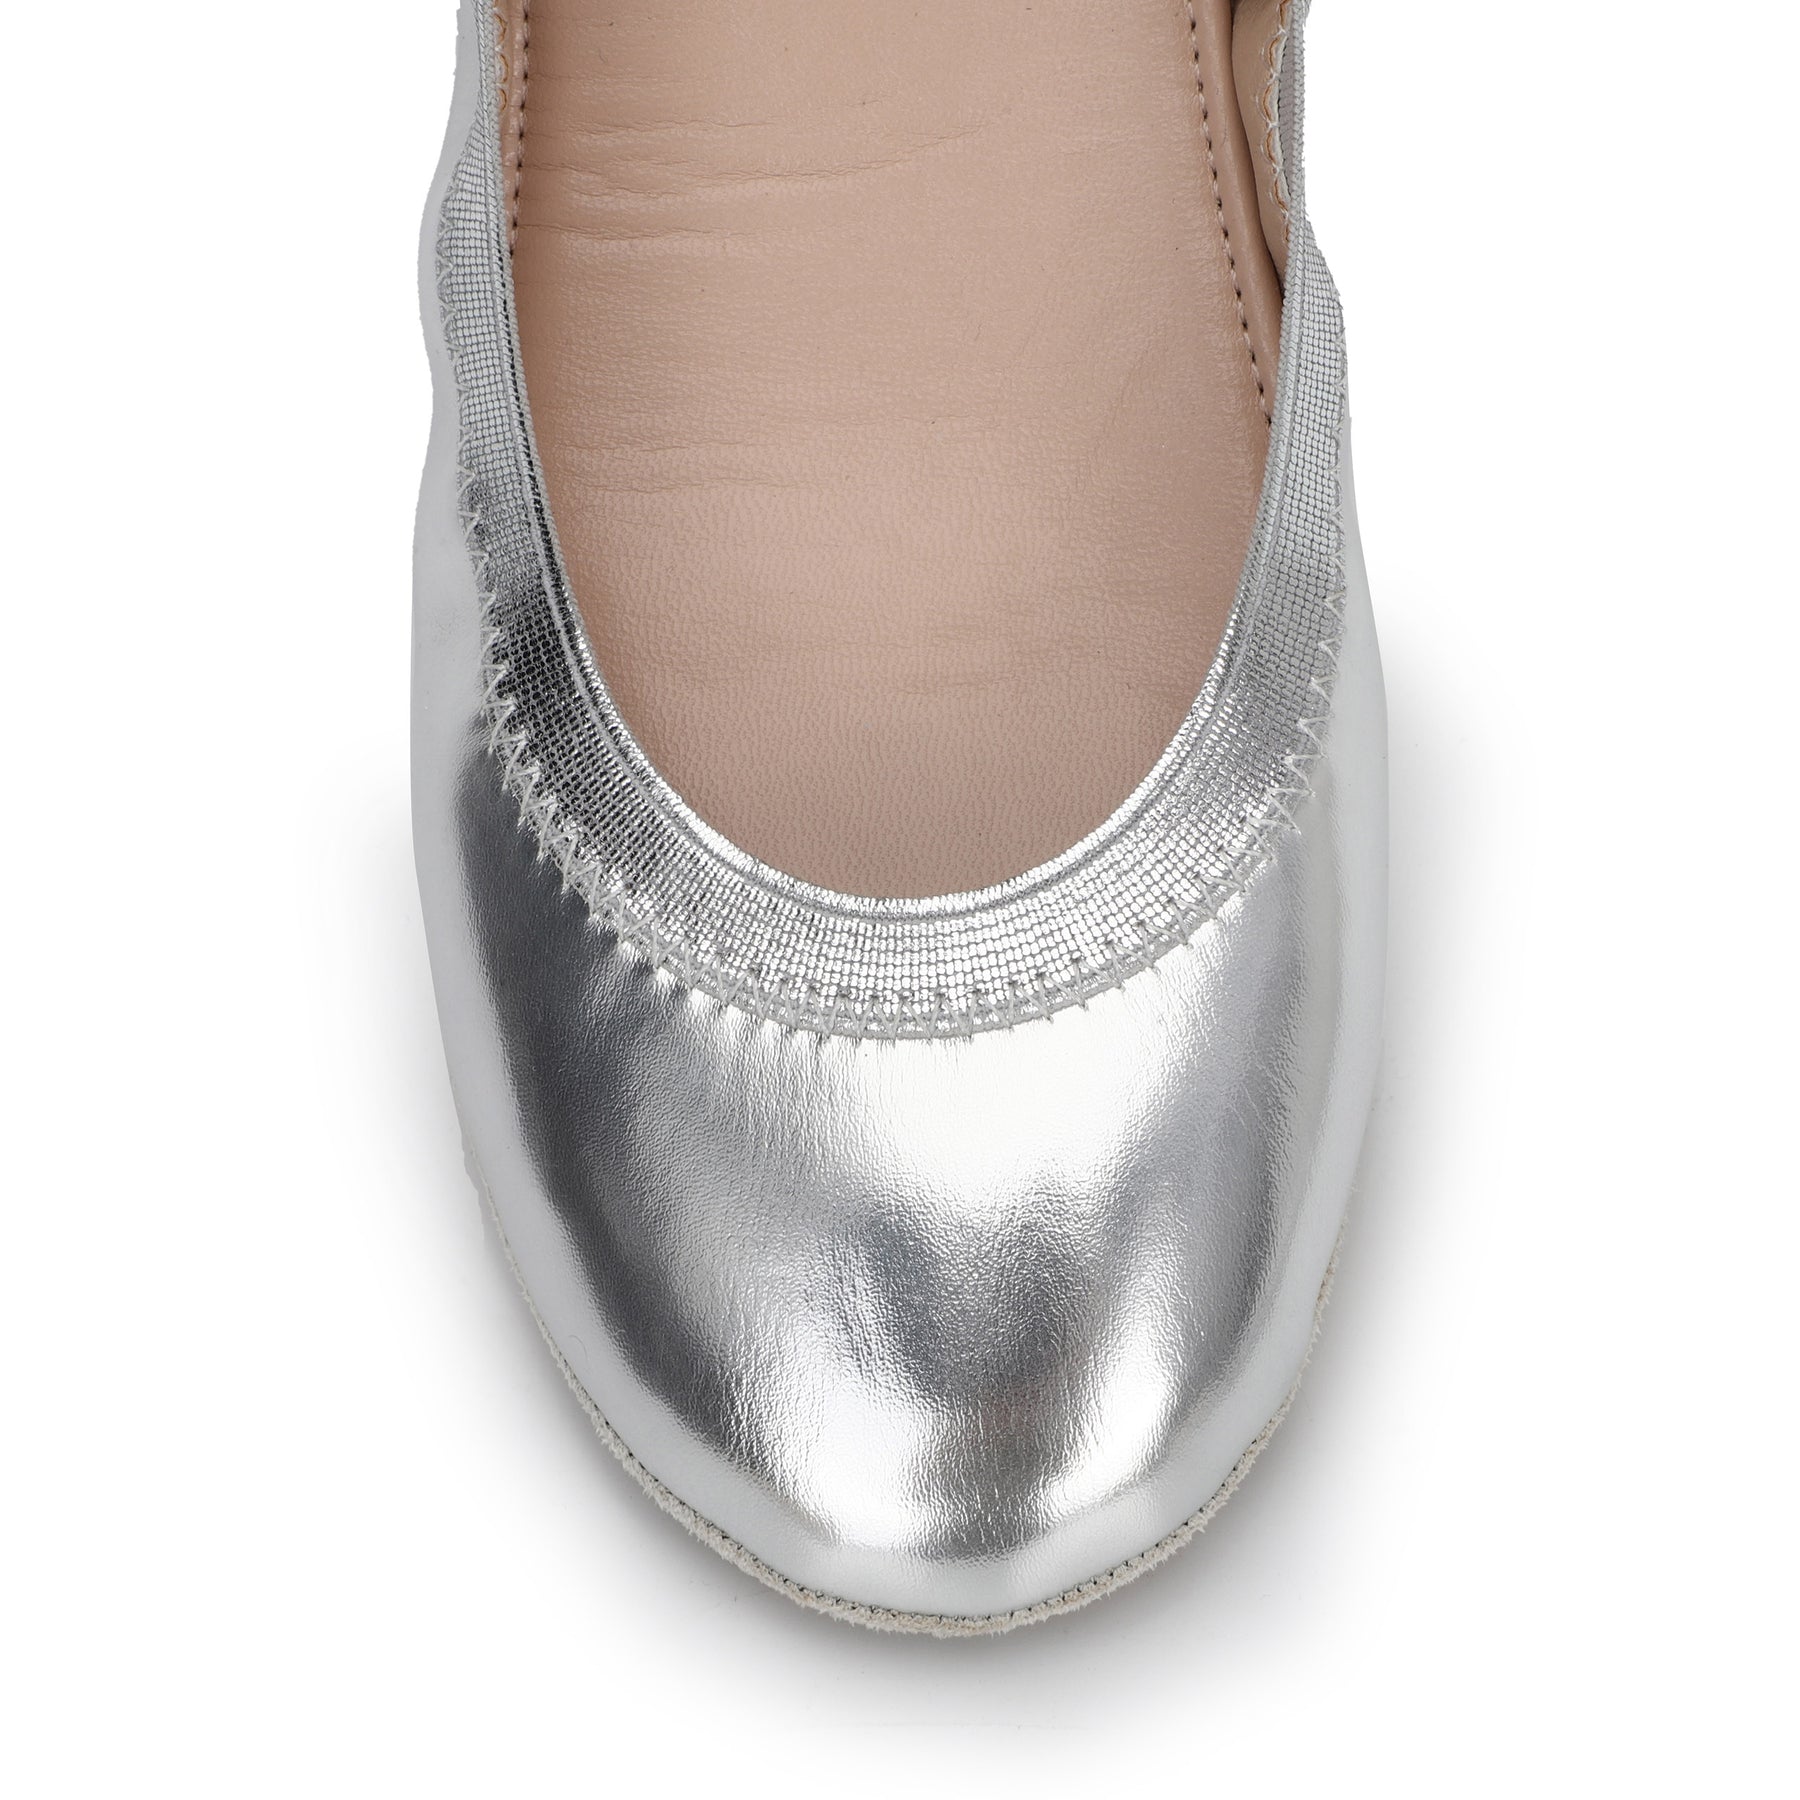 Nina Flat Ballerina - Shoes